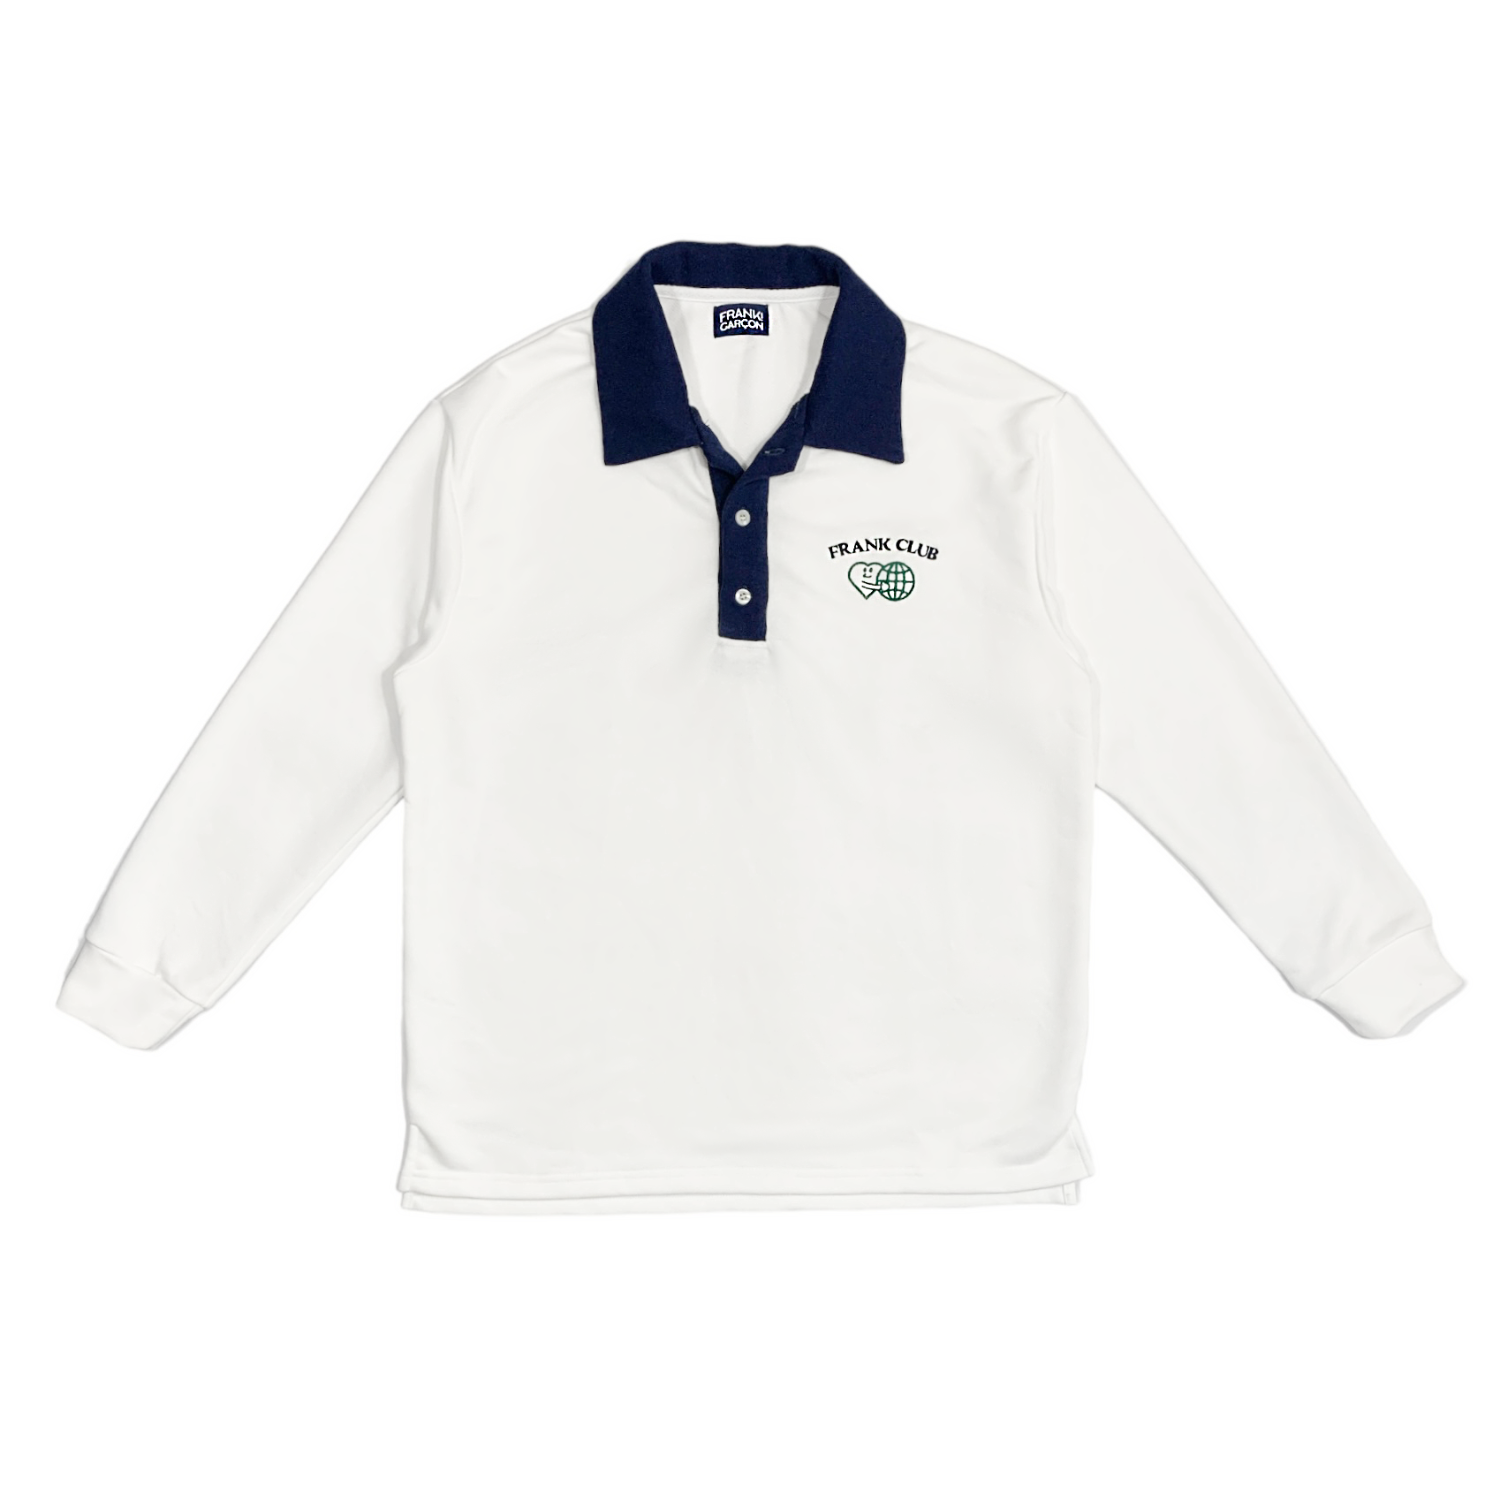 Frank! Club Polo Sweatshirt (White / Navy)